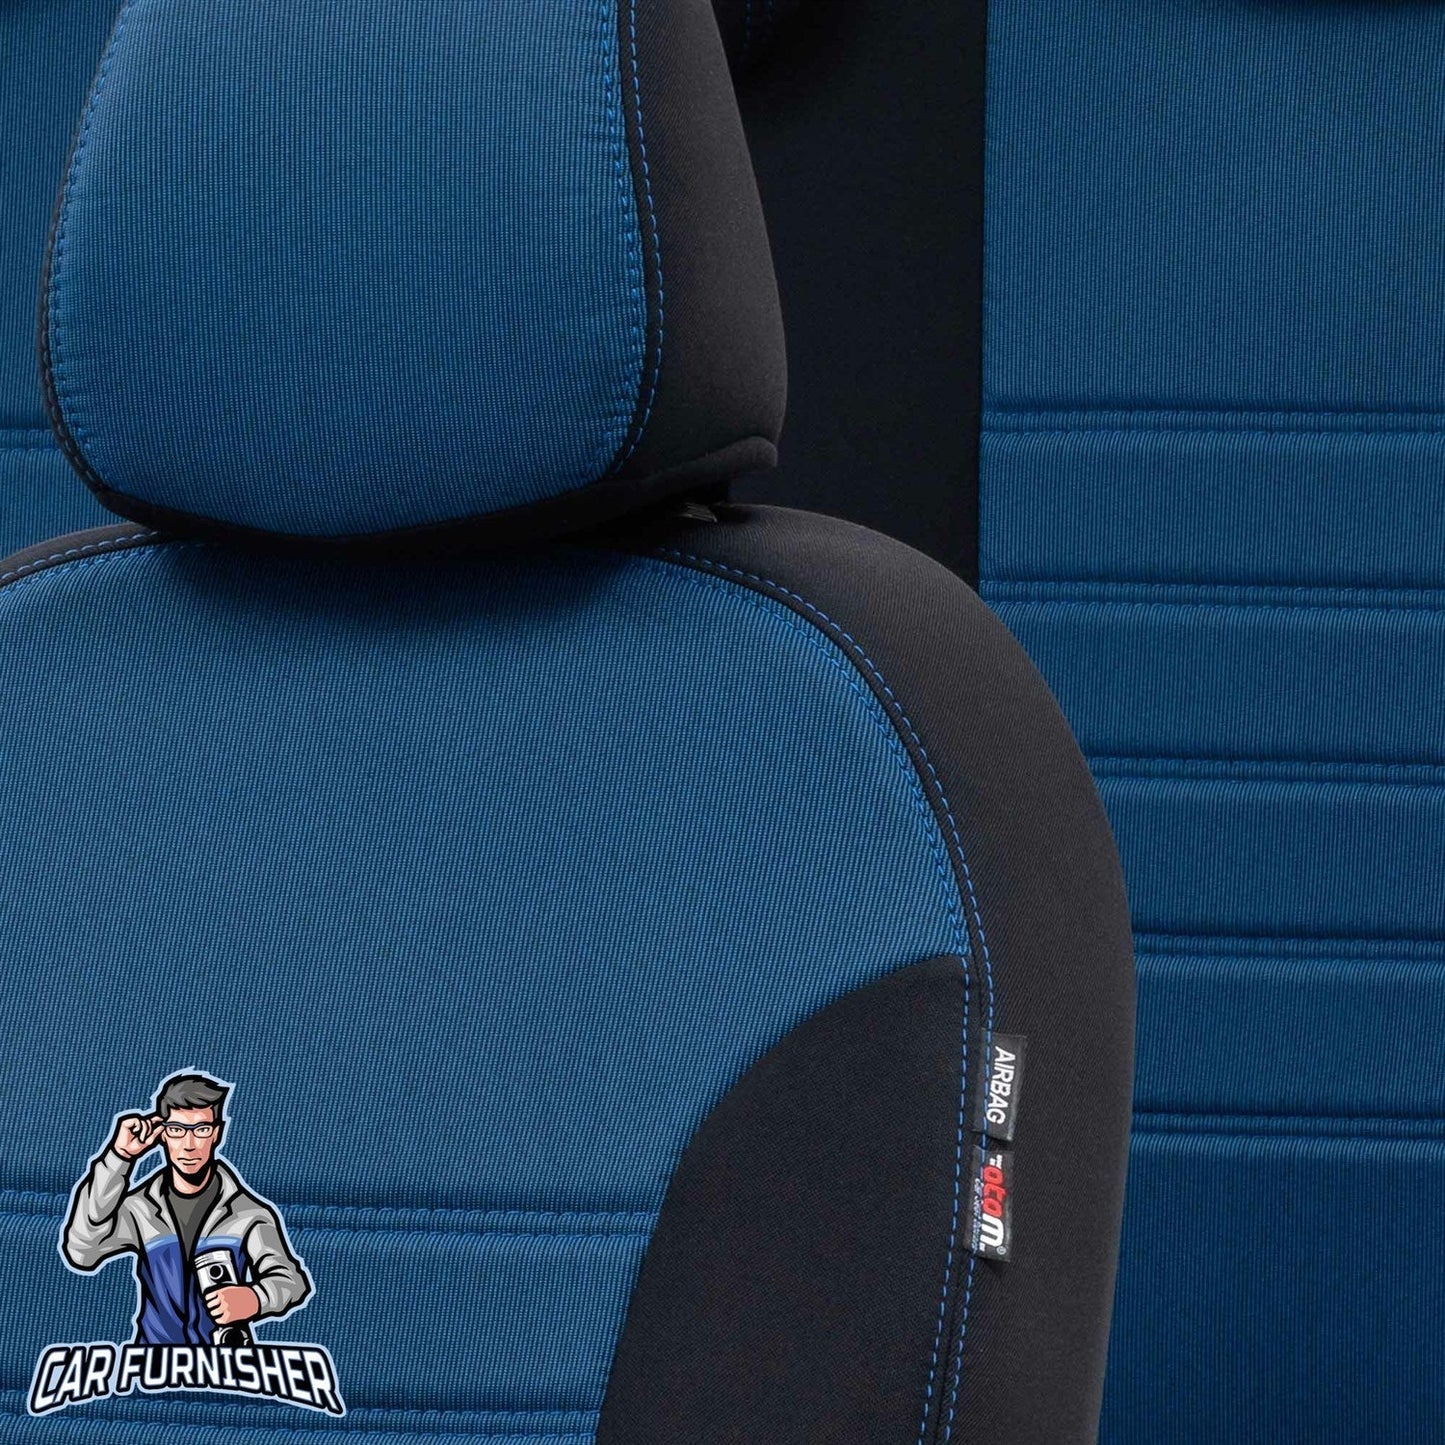 Peugeot 407 Seat Covers Original Jacquard Design Blue Jacquard Fabric